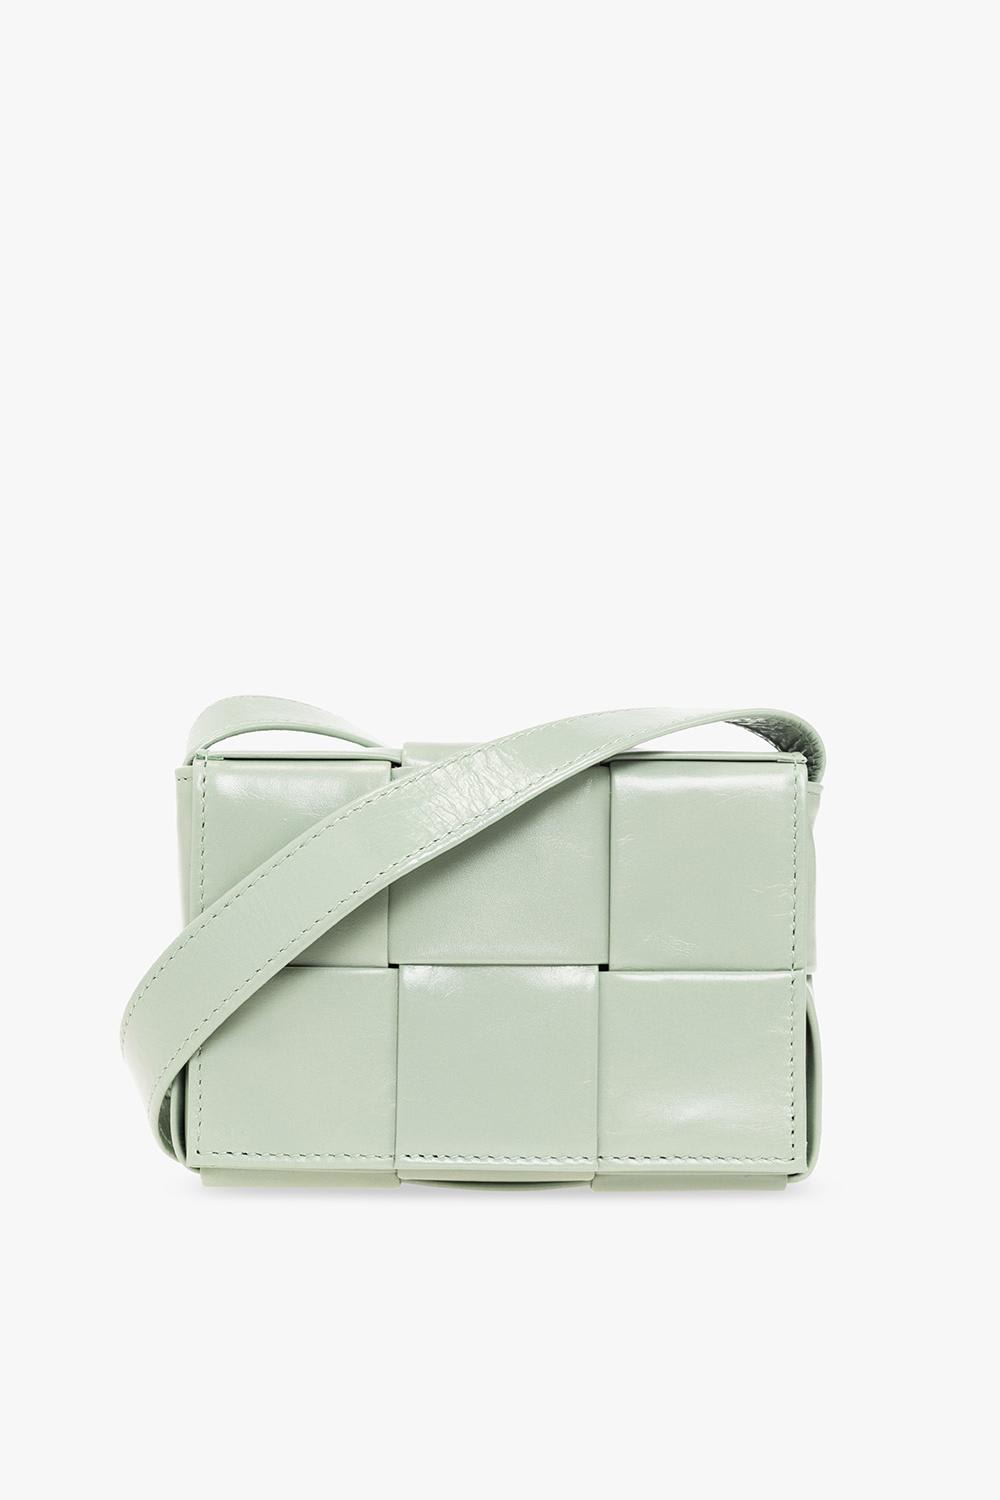 Bottega Veneta casette Mini Shoulder Bag